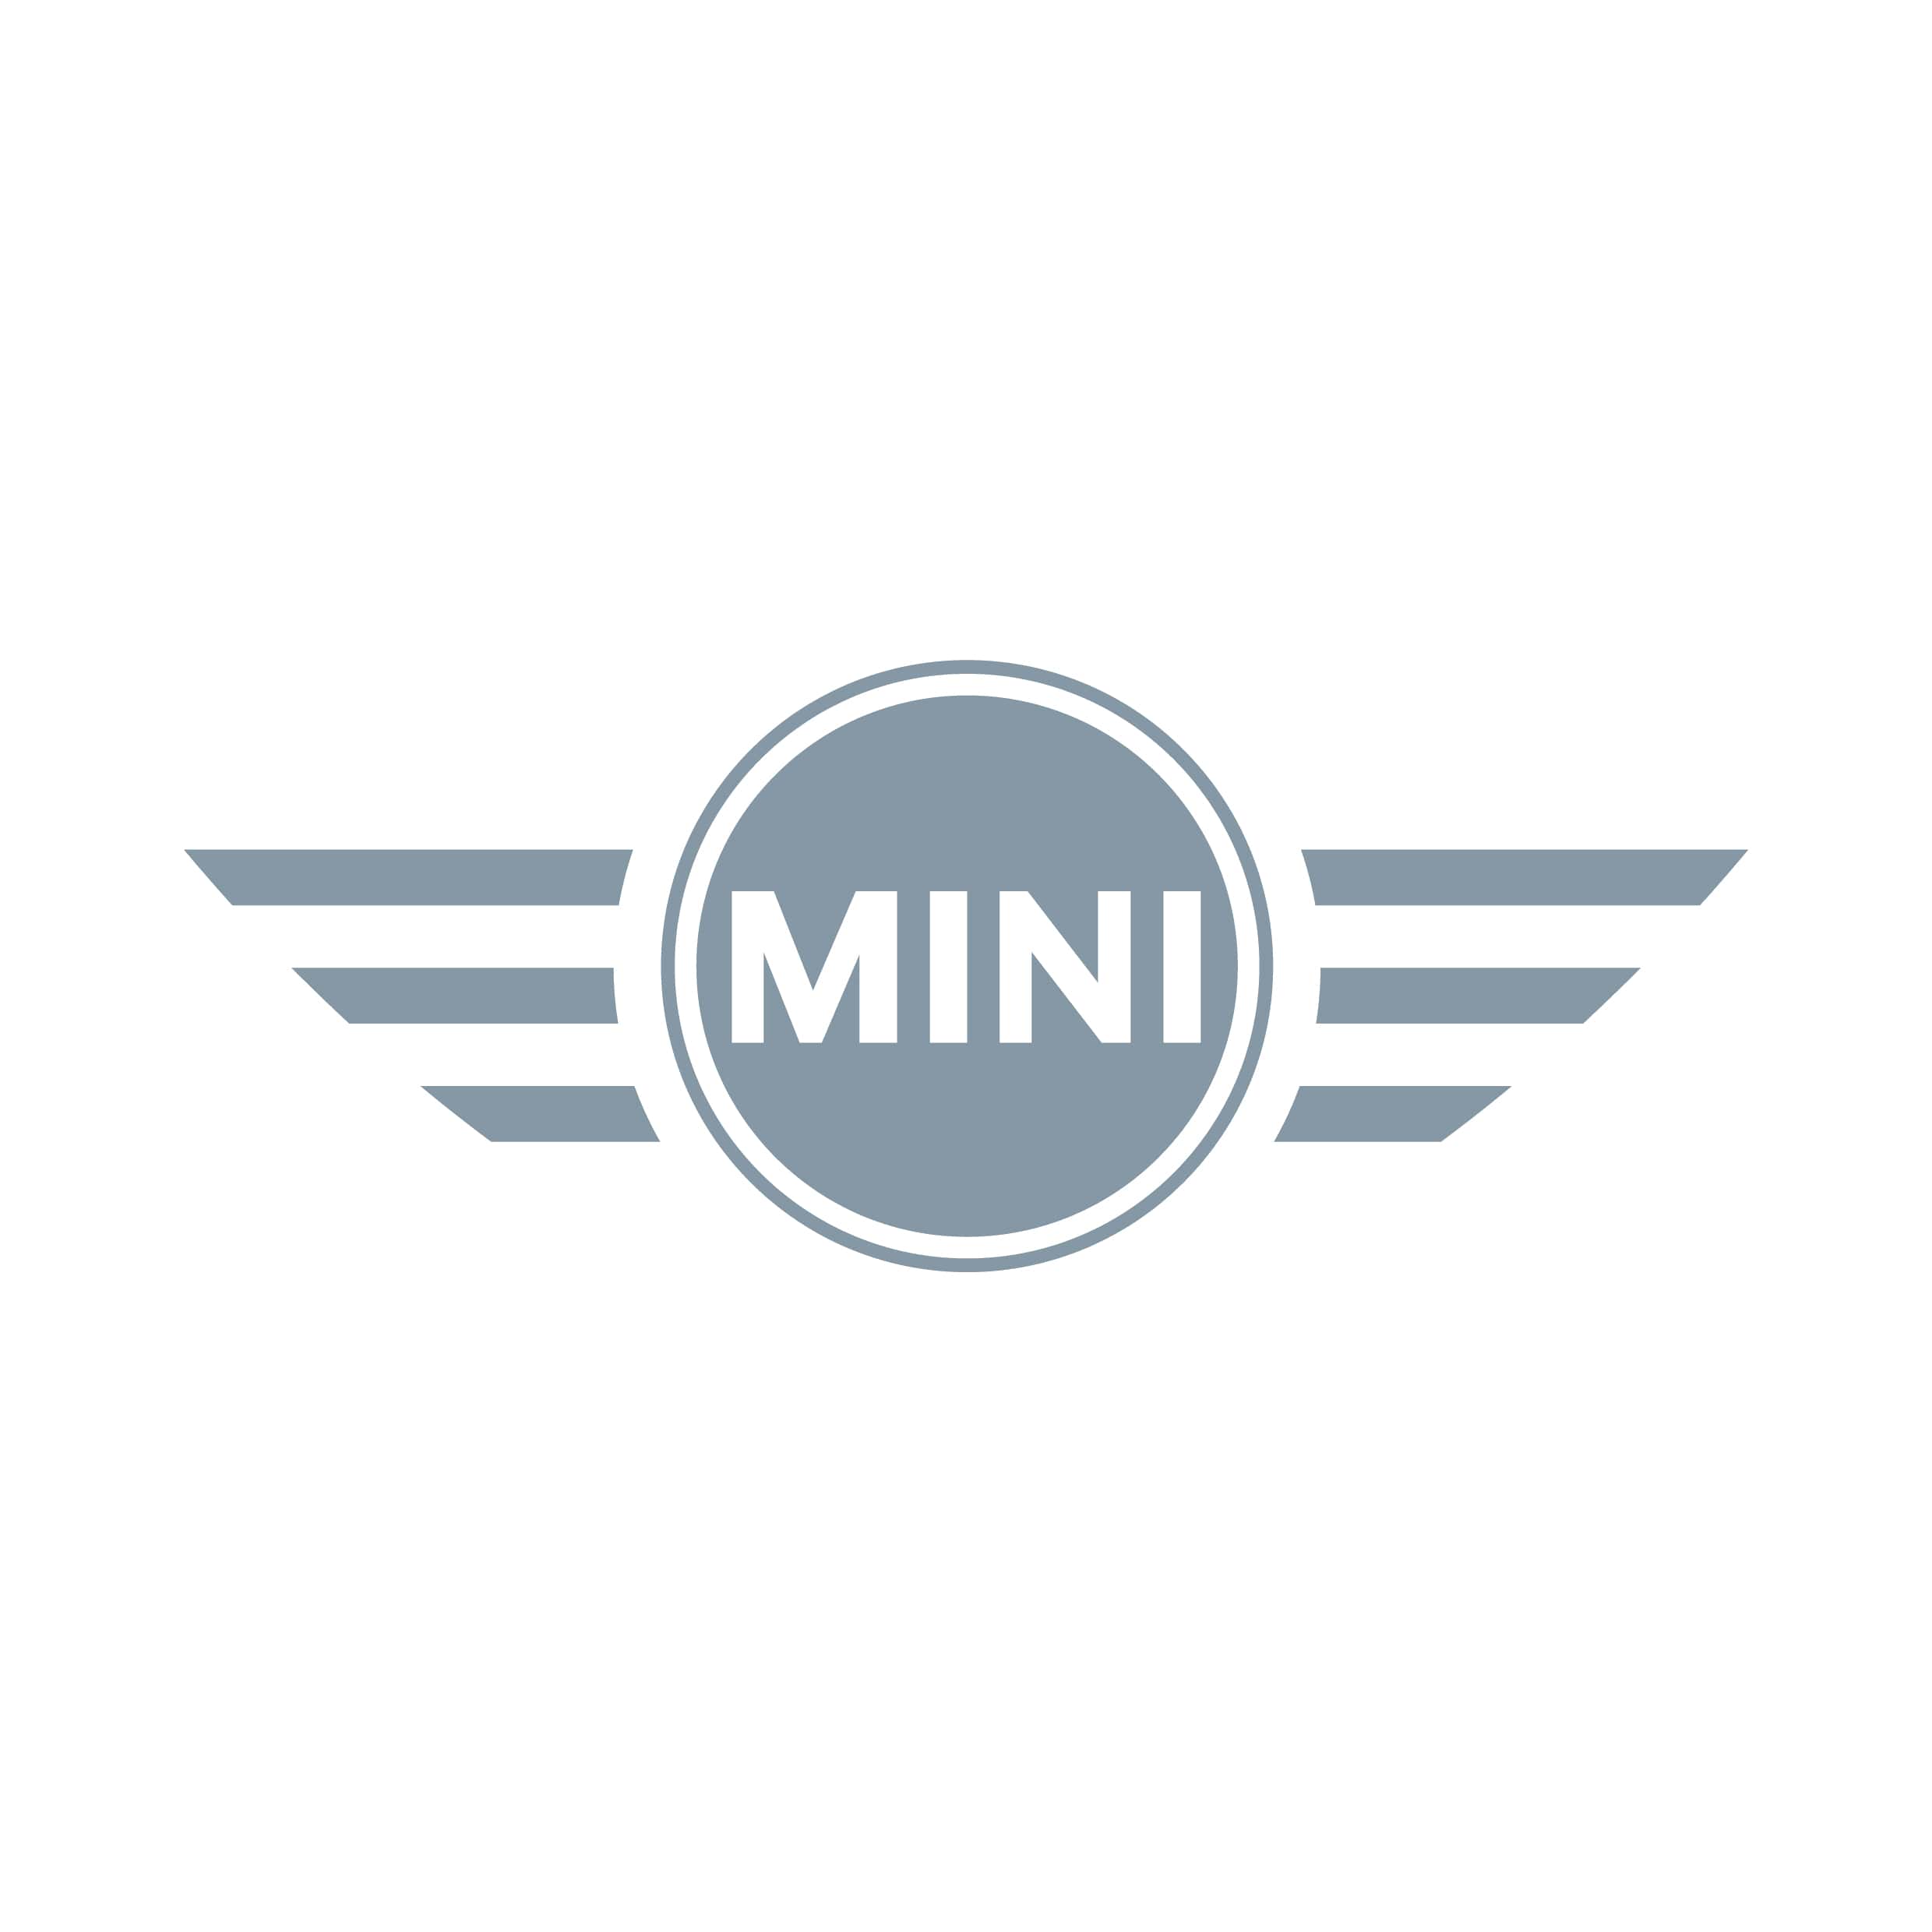 stickers-mini-ref2-bmw-autocollant-voiture-sticker-auto-autocollants-decals-sponsors-racing-tuning-sport-logo-min